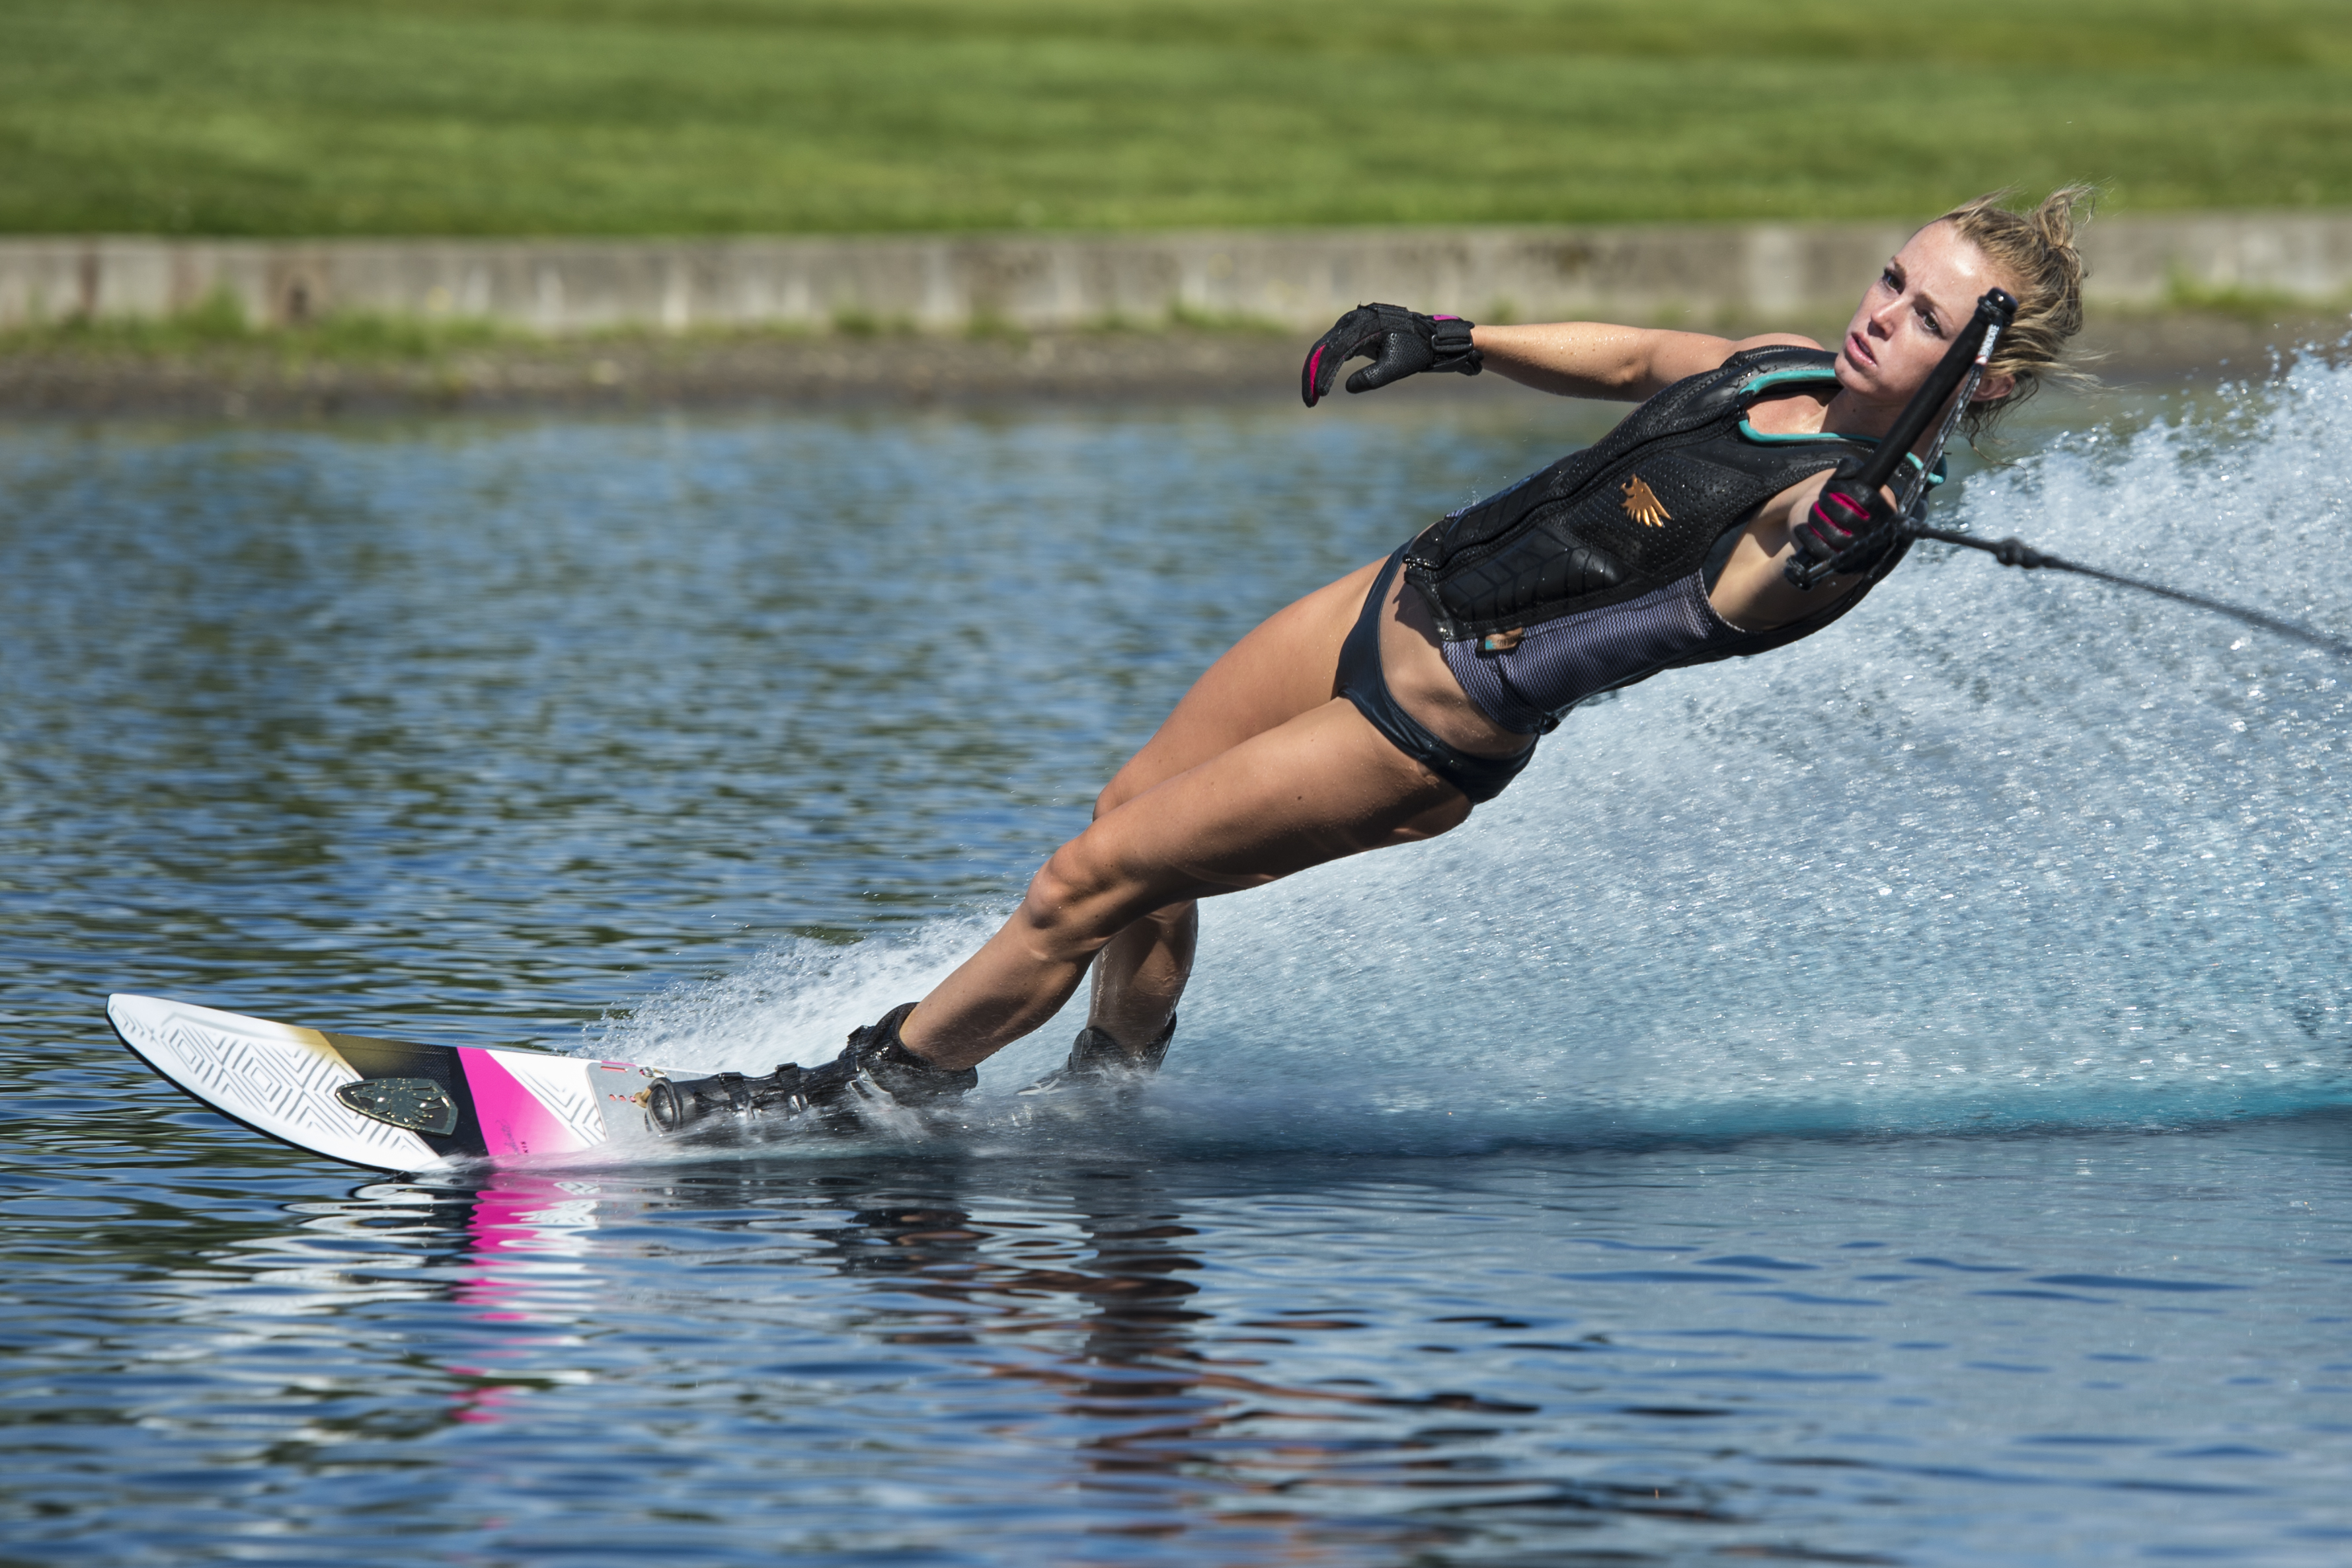 Water Skis - Water Skiing Equipment - HO Sports. 